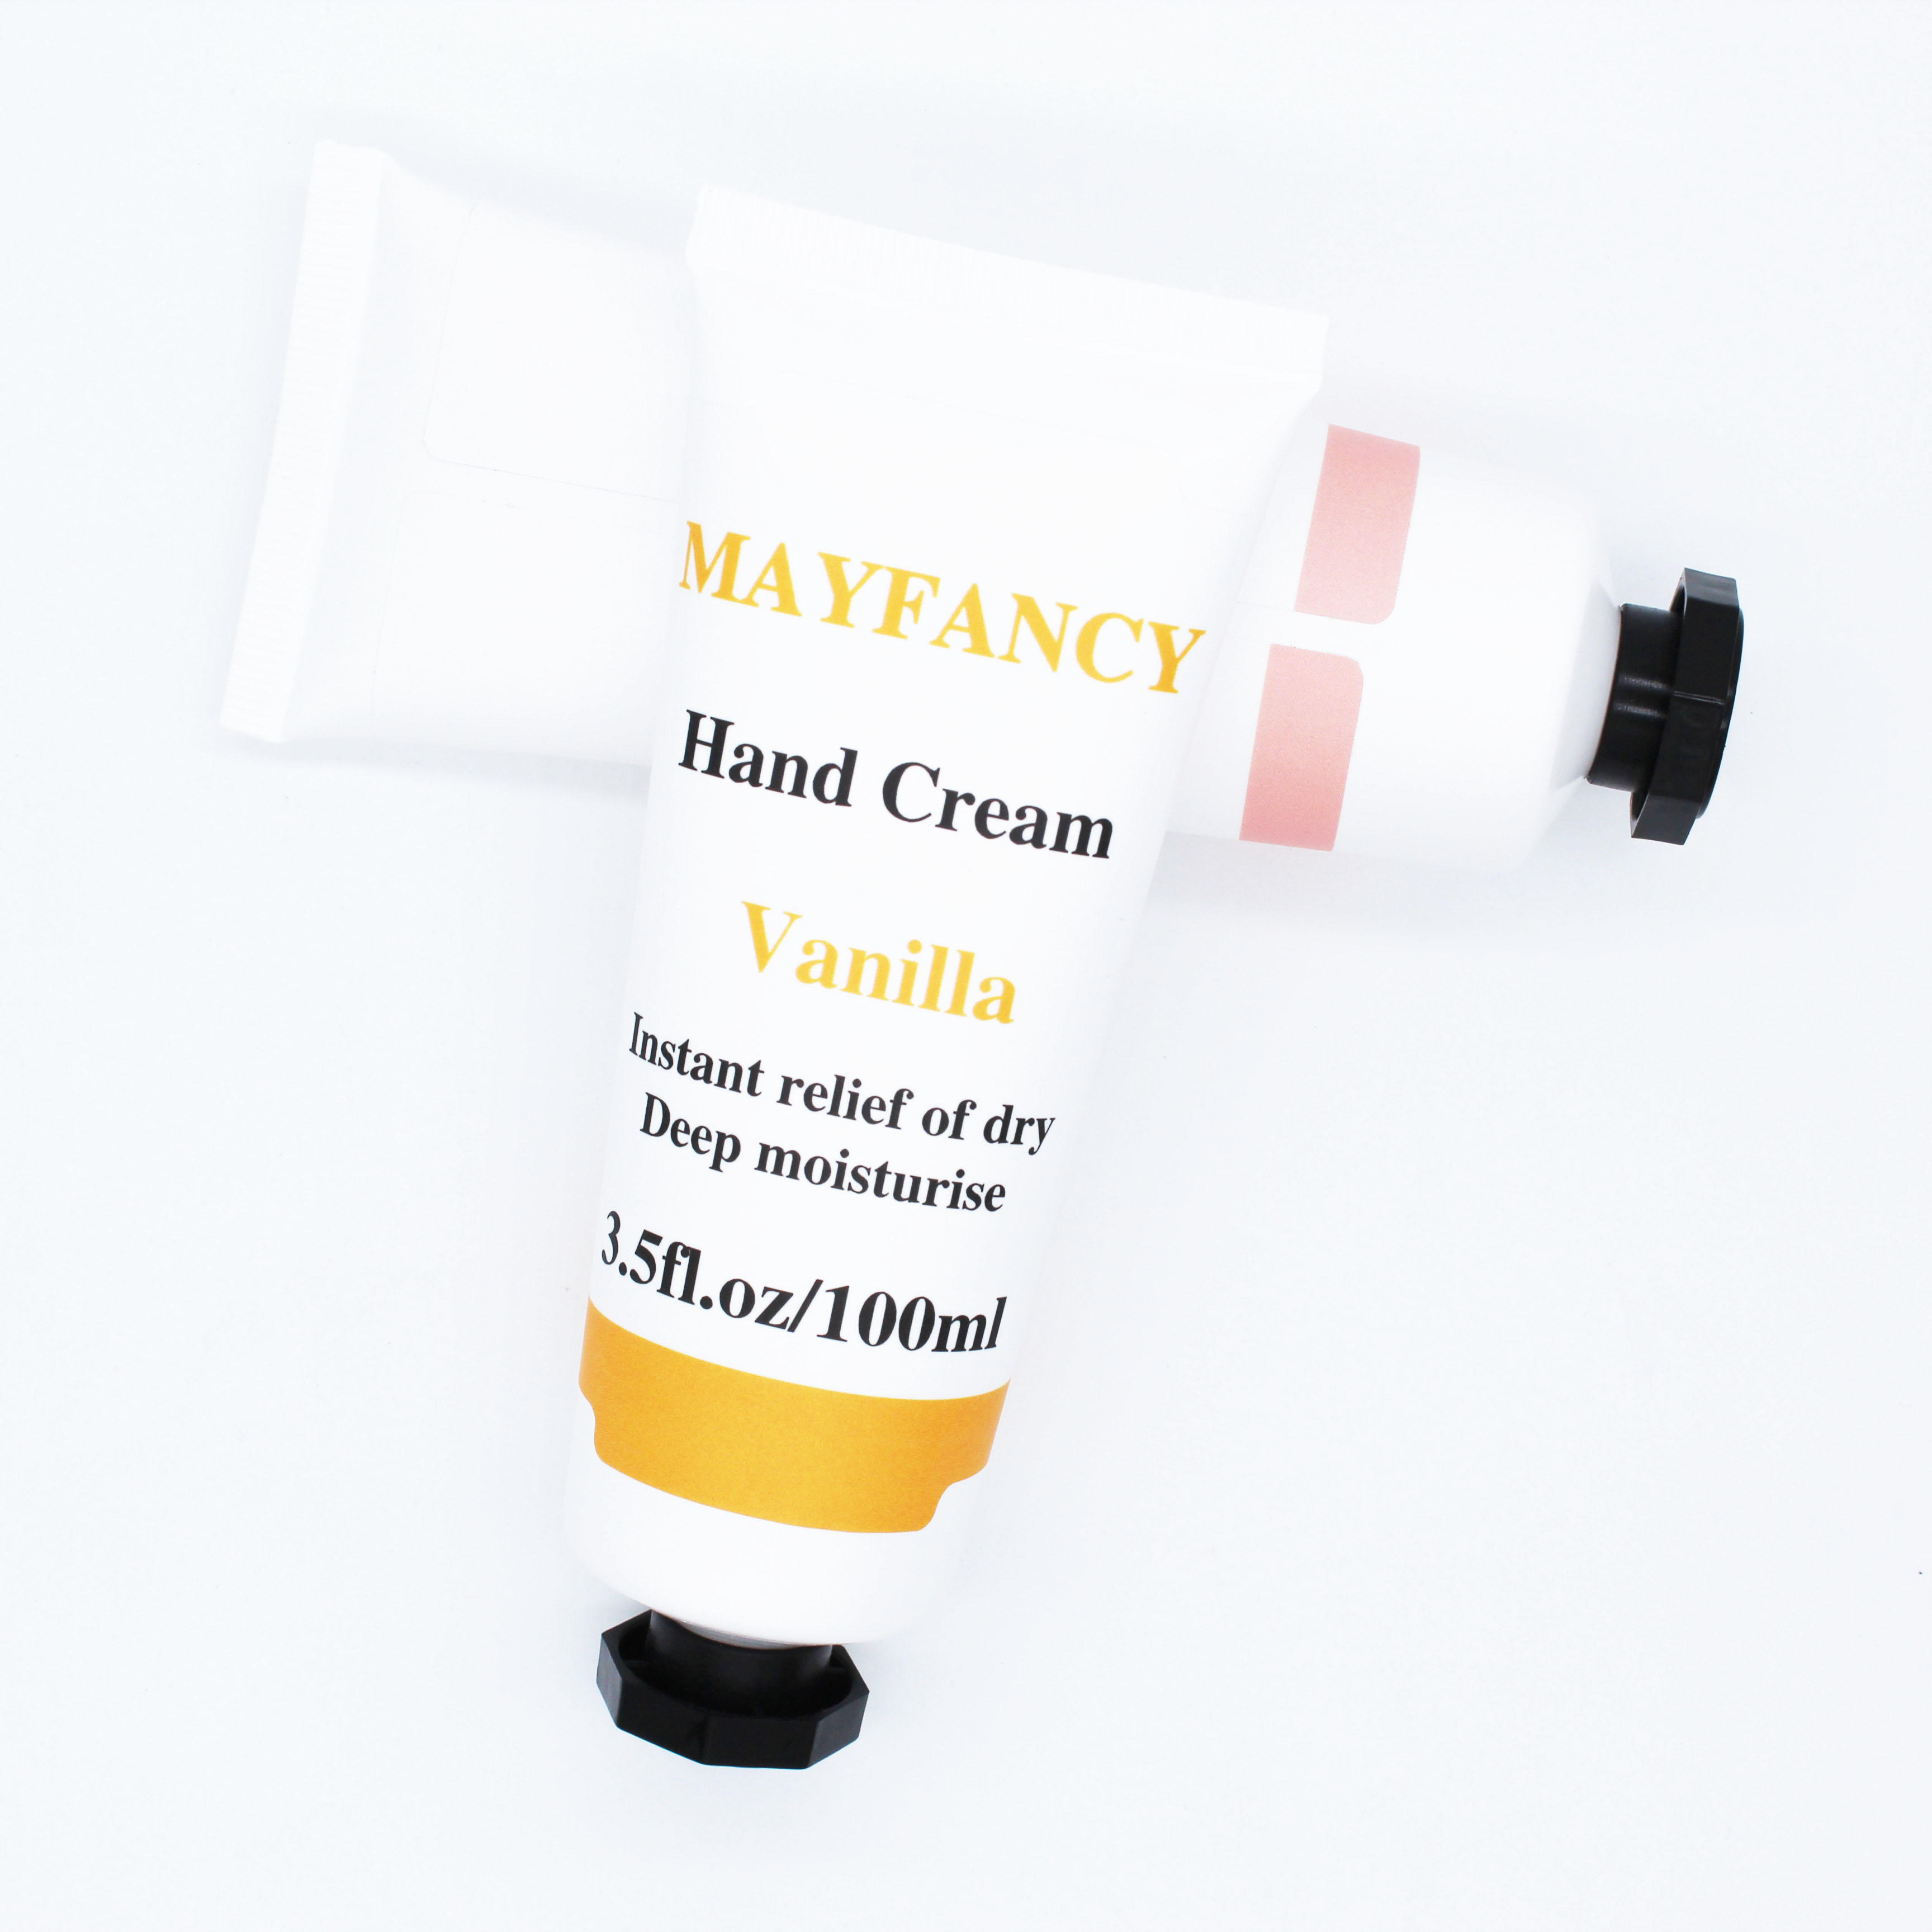 Mayfancy Vanilla Hand Cream